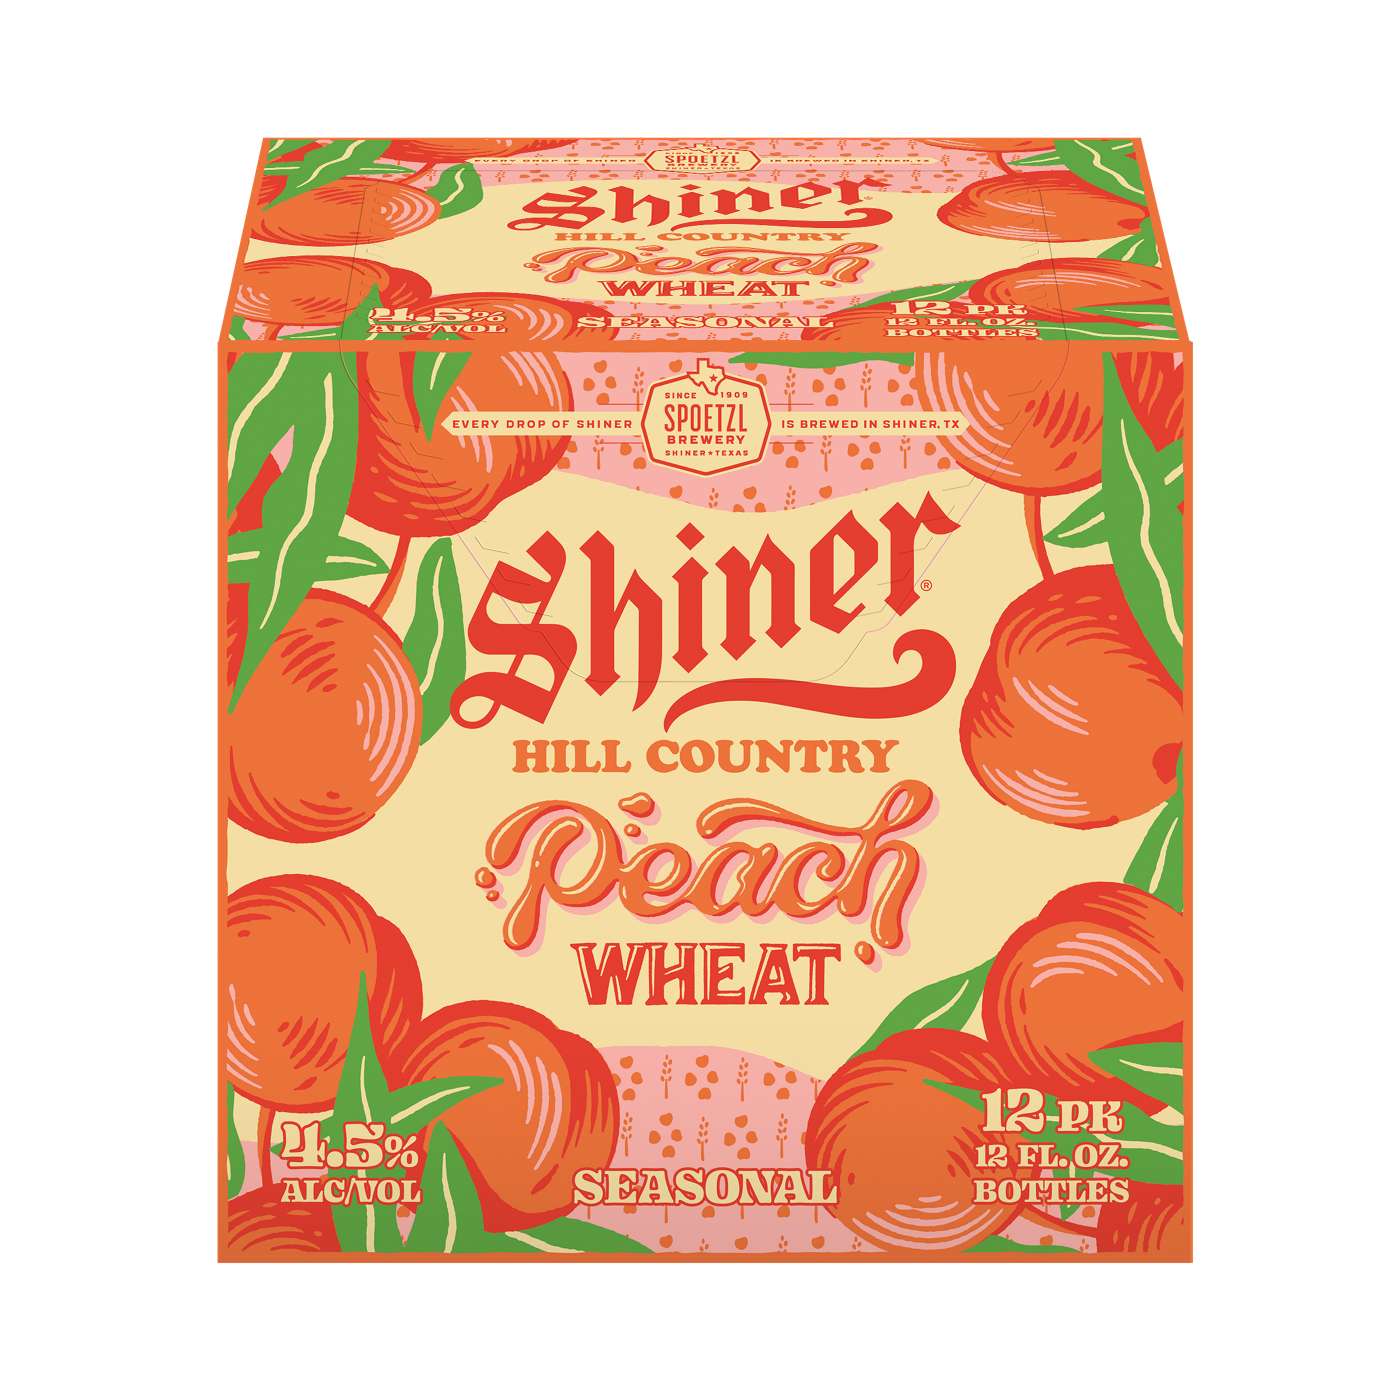 Shiner Seasonal Beer 12 pk Bottles - Peach Wheat OR Lemonade Shandy; image 3 of 3